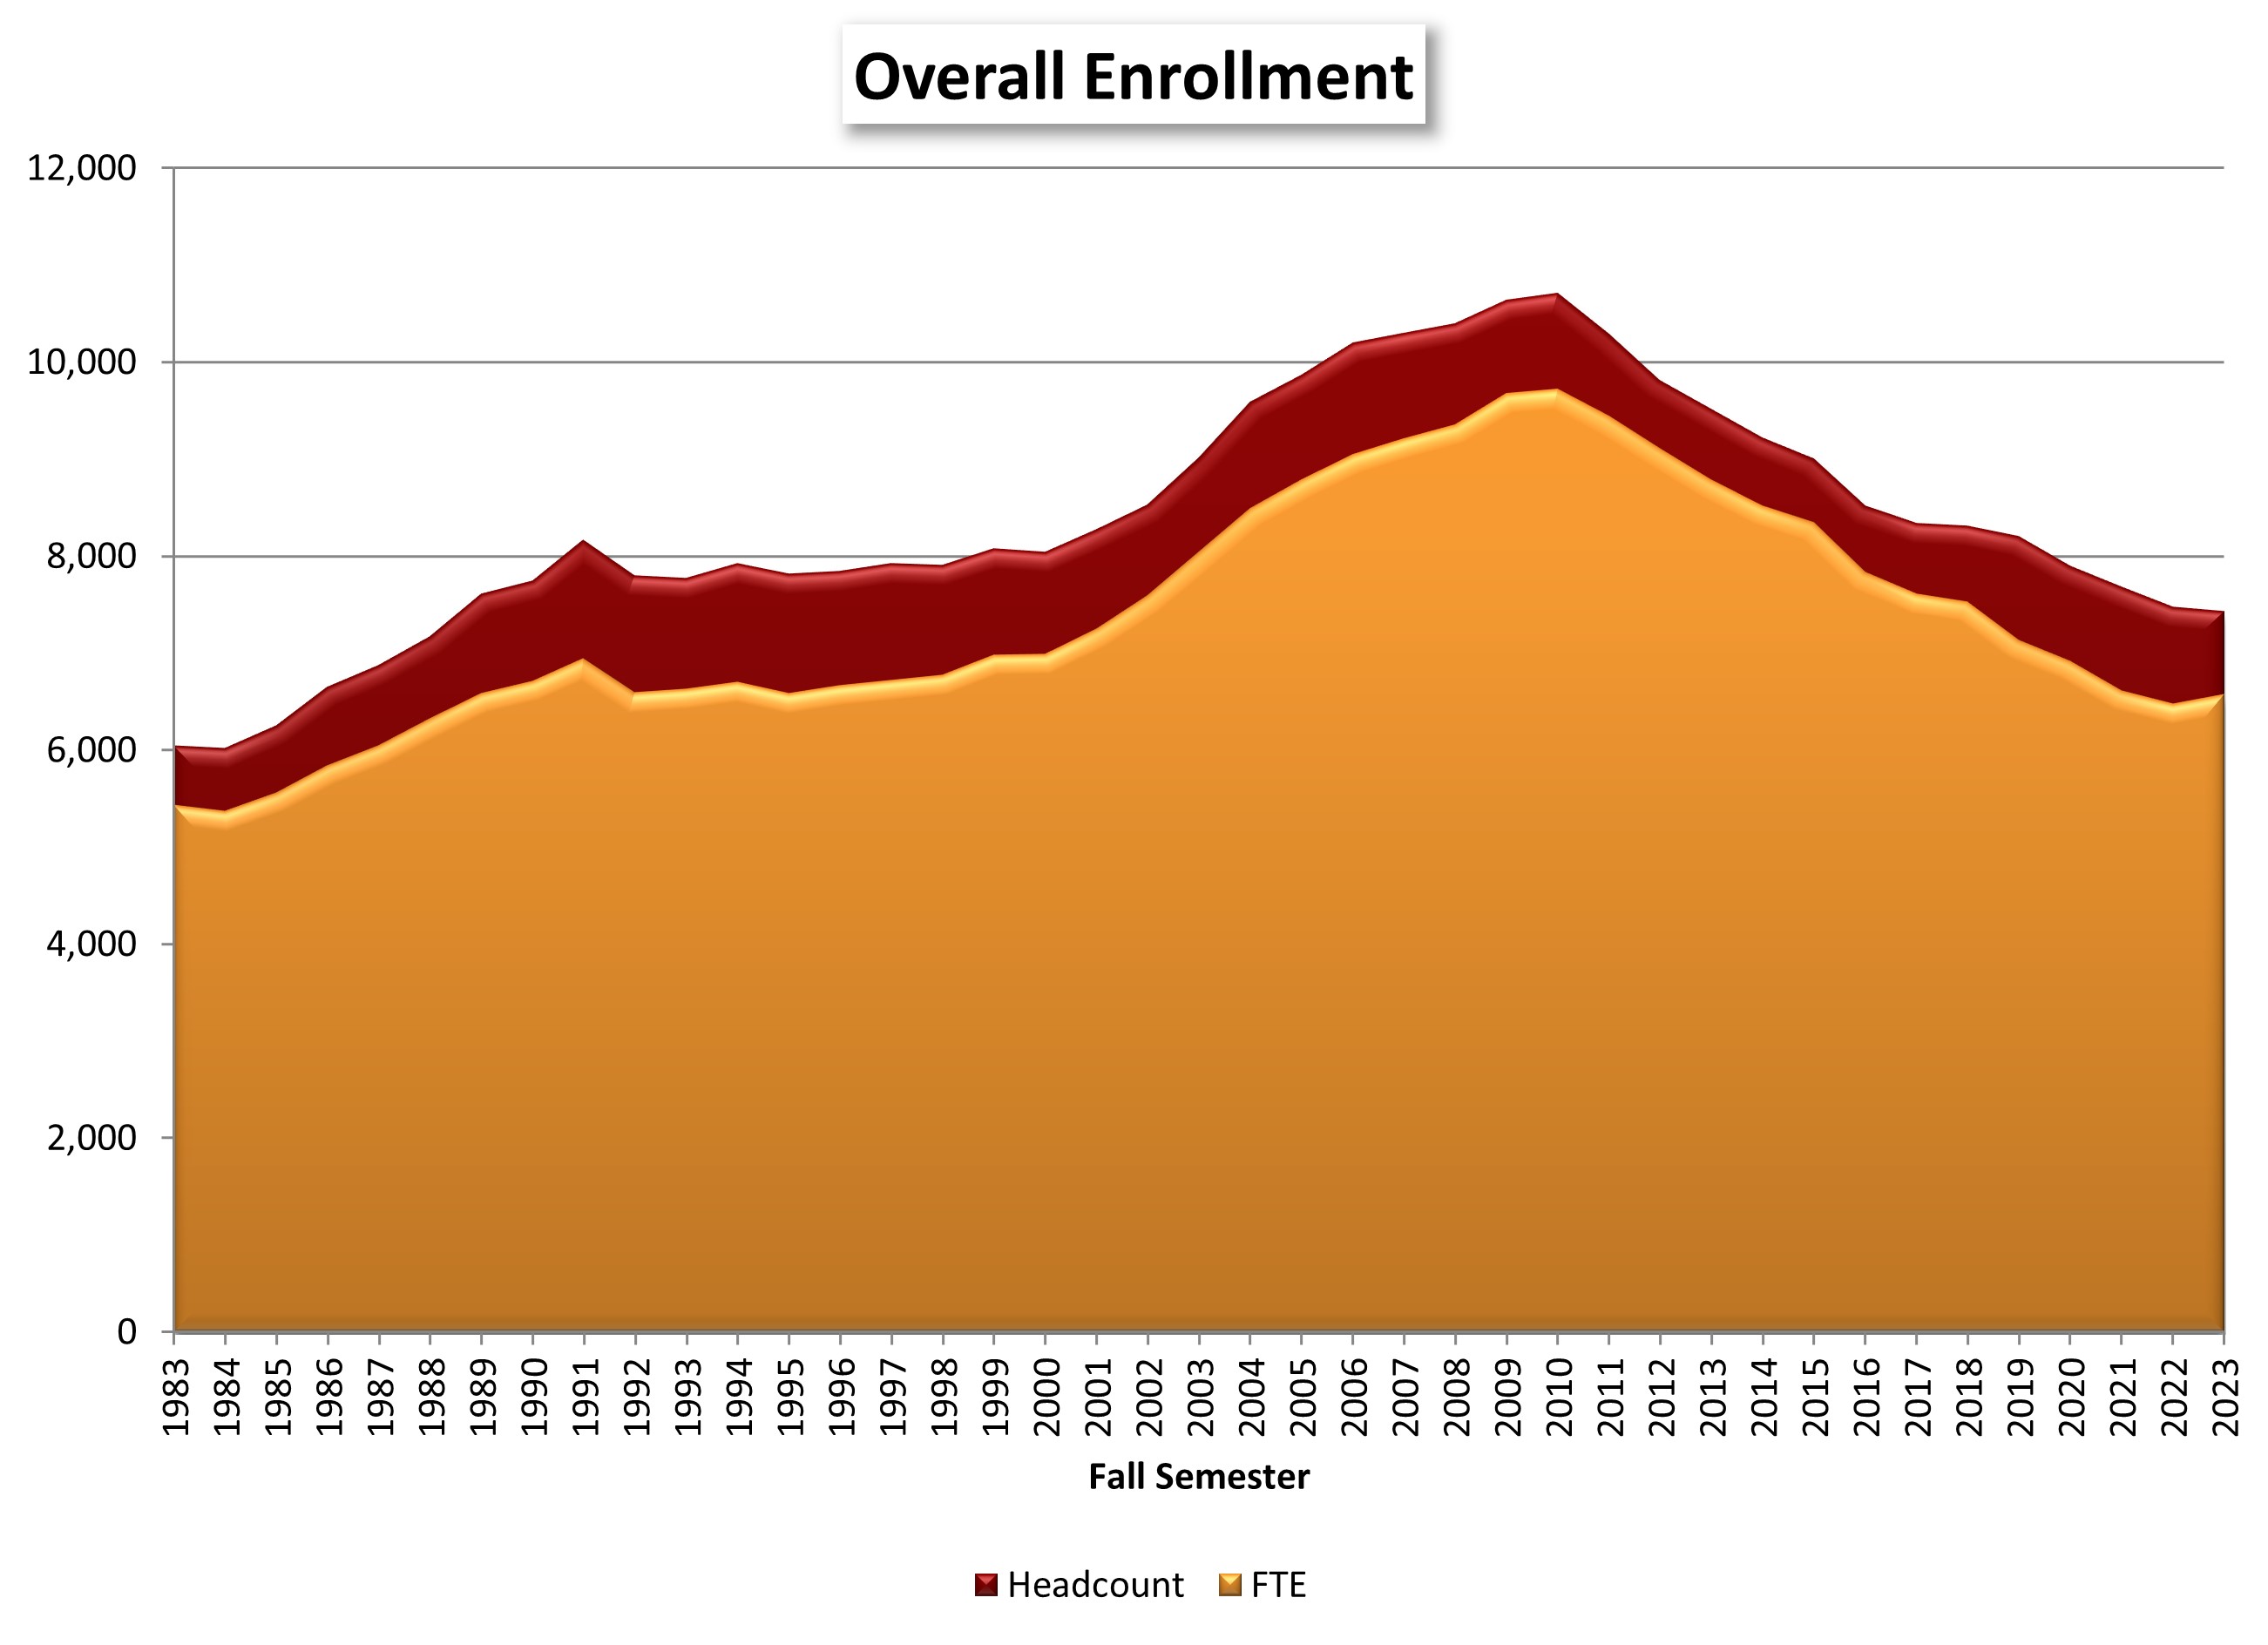 Overall Headcount/FTE Enrollment chart